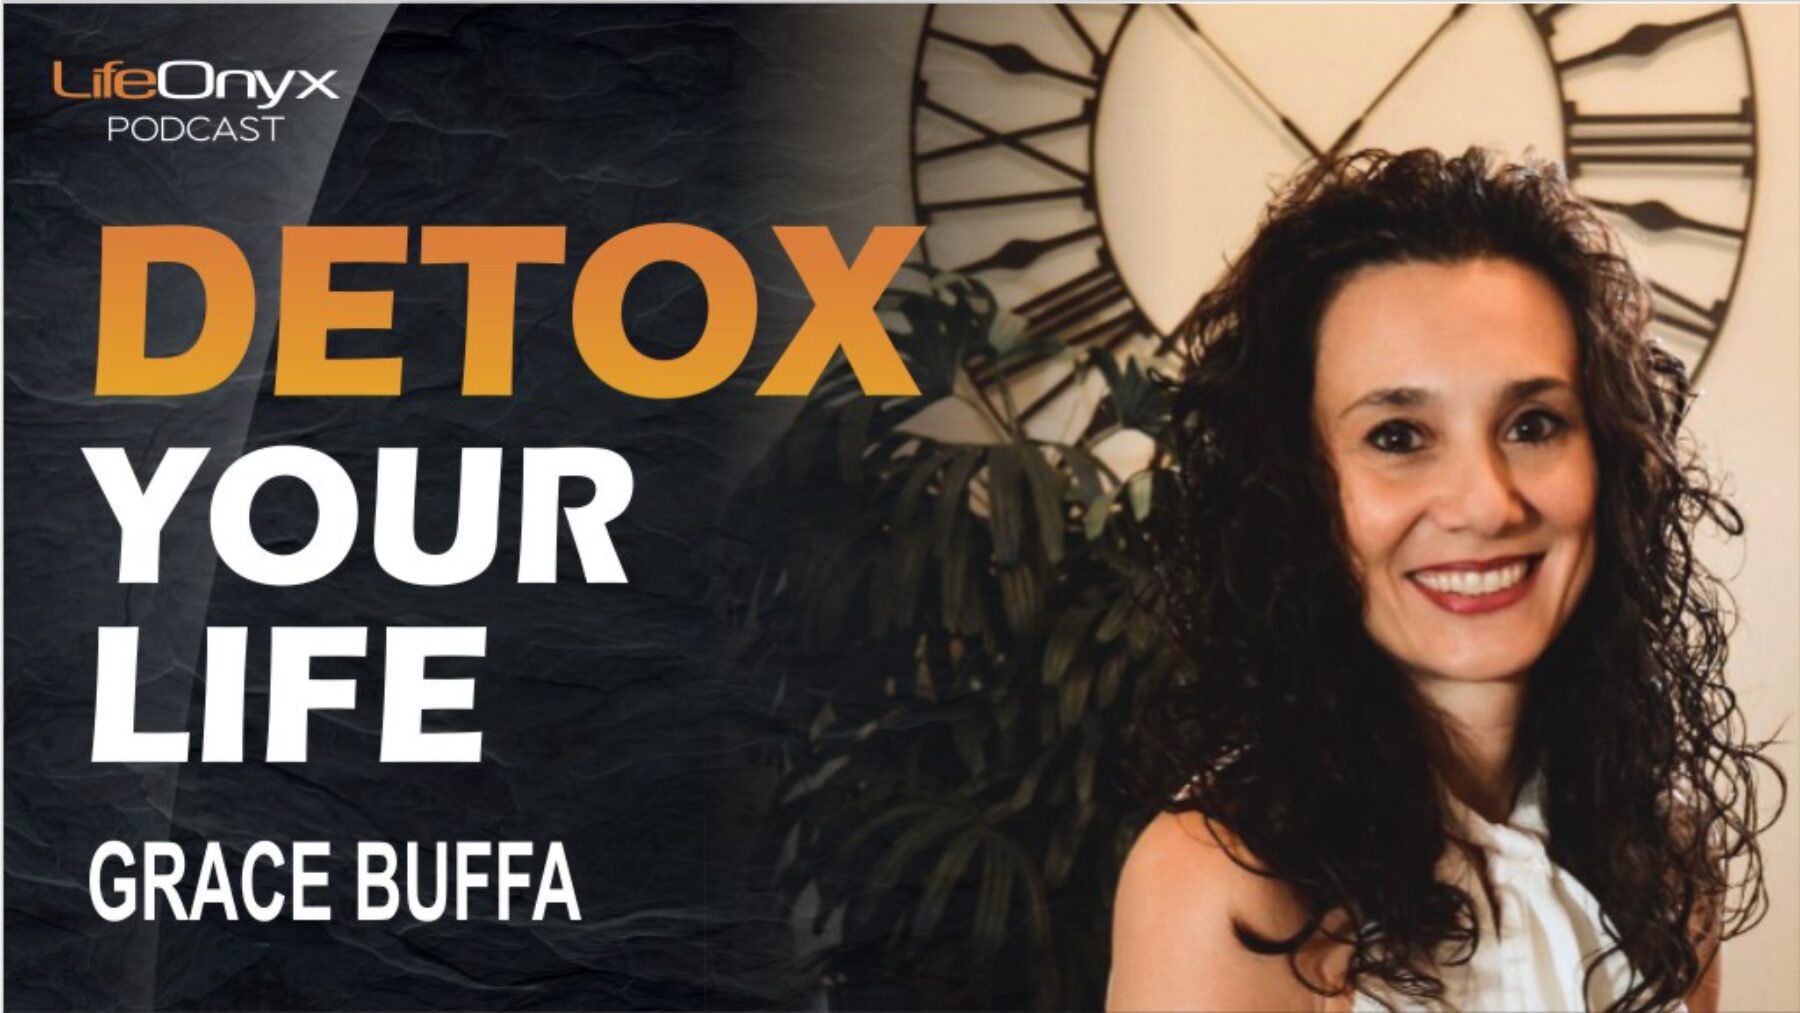 Detox Your Life with Grace Buffa - LifeOnyx